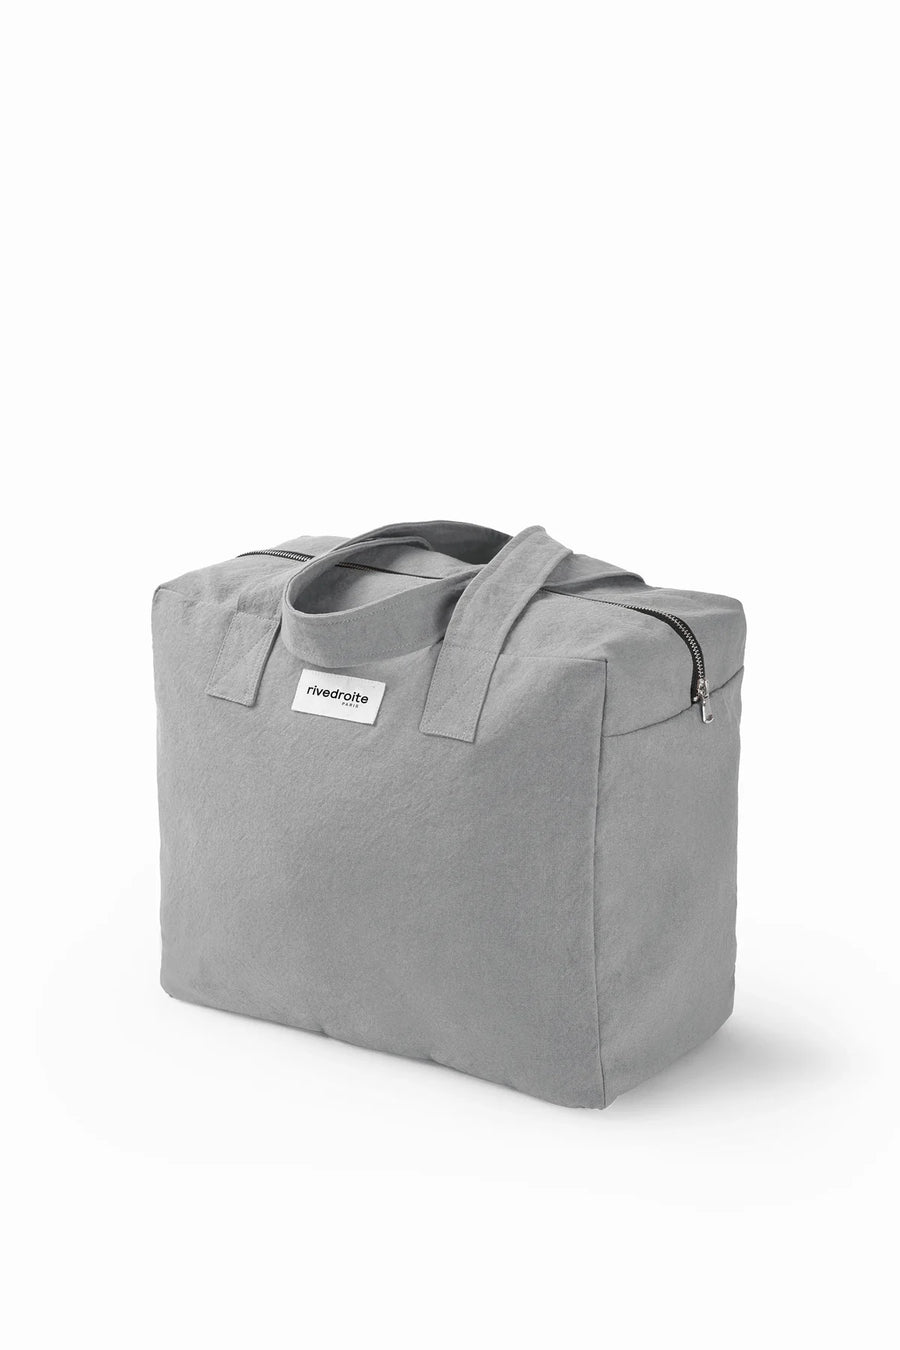 Celestins - The 24H Bag Icy Grey